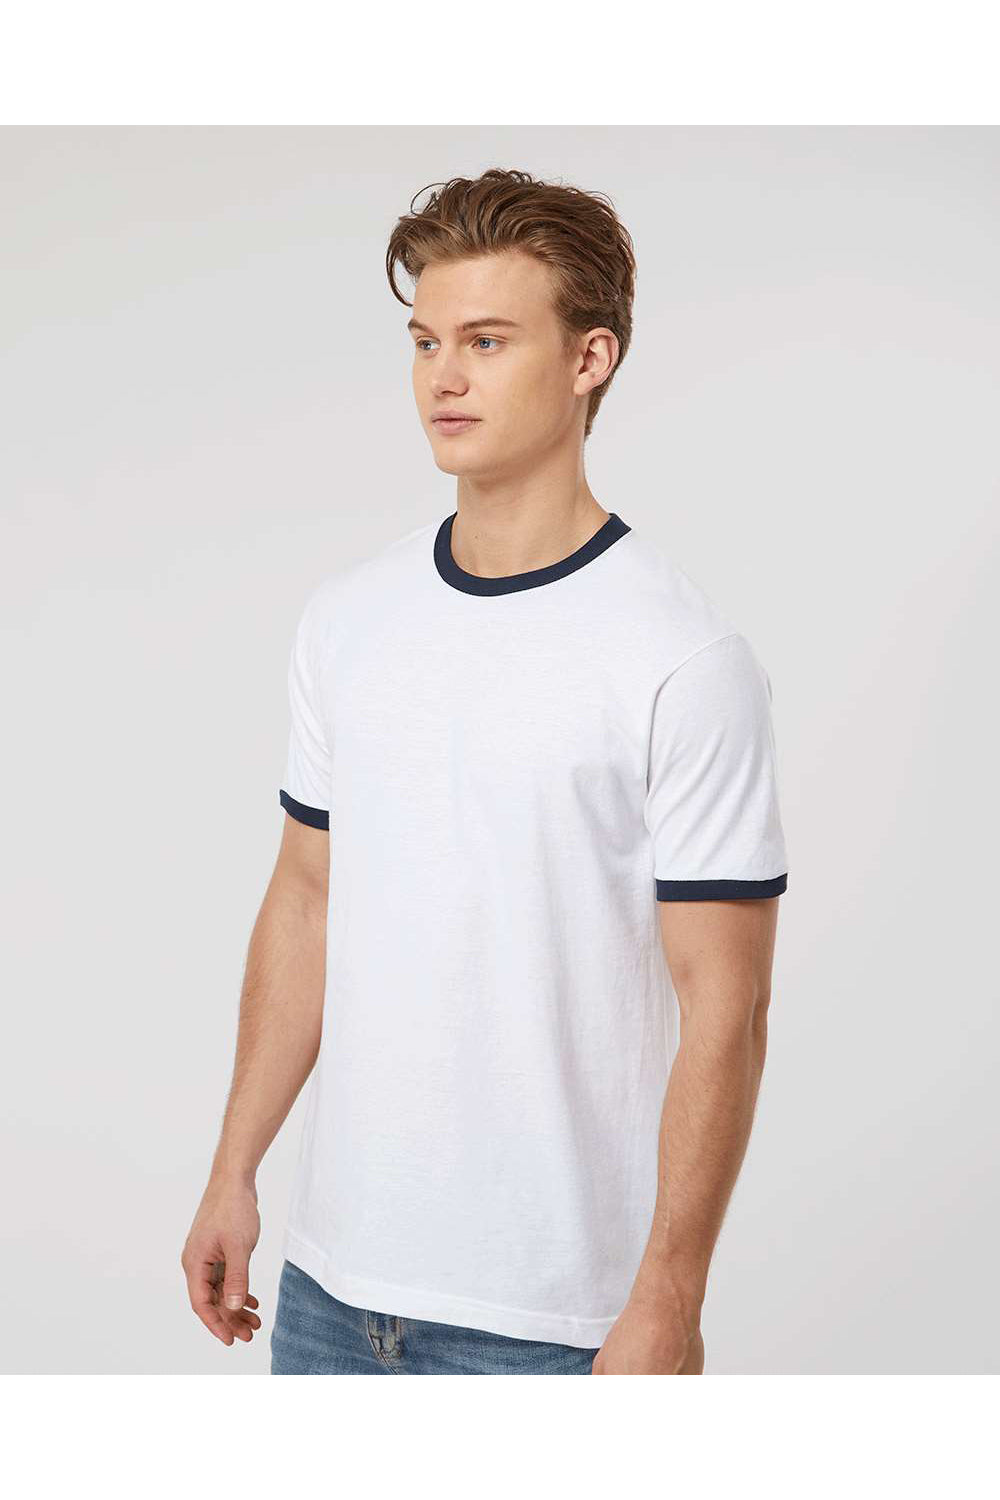 Tultex 246 Mens Fine Jersey Ringer Short Sleeve Crewneck T-Shirt White/Navy Blue Model Side